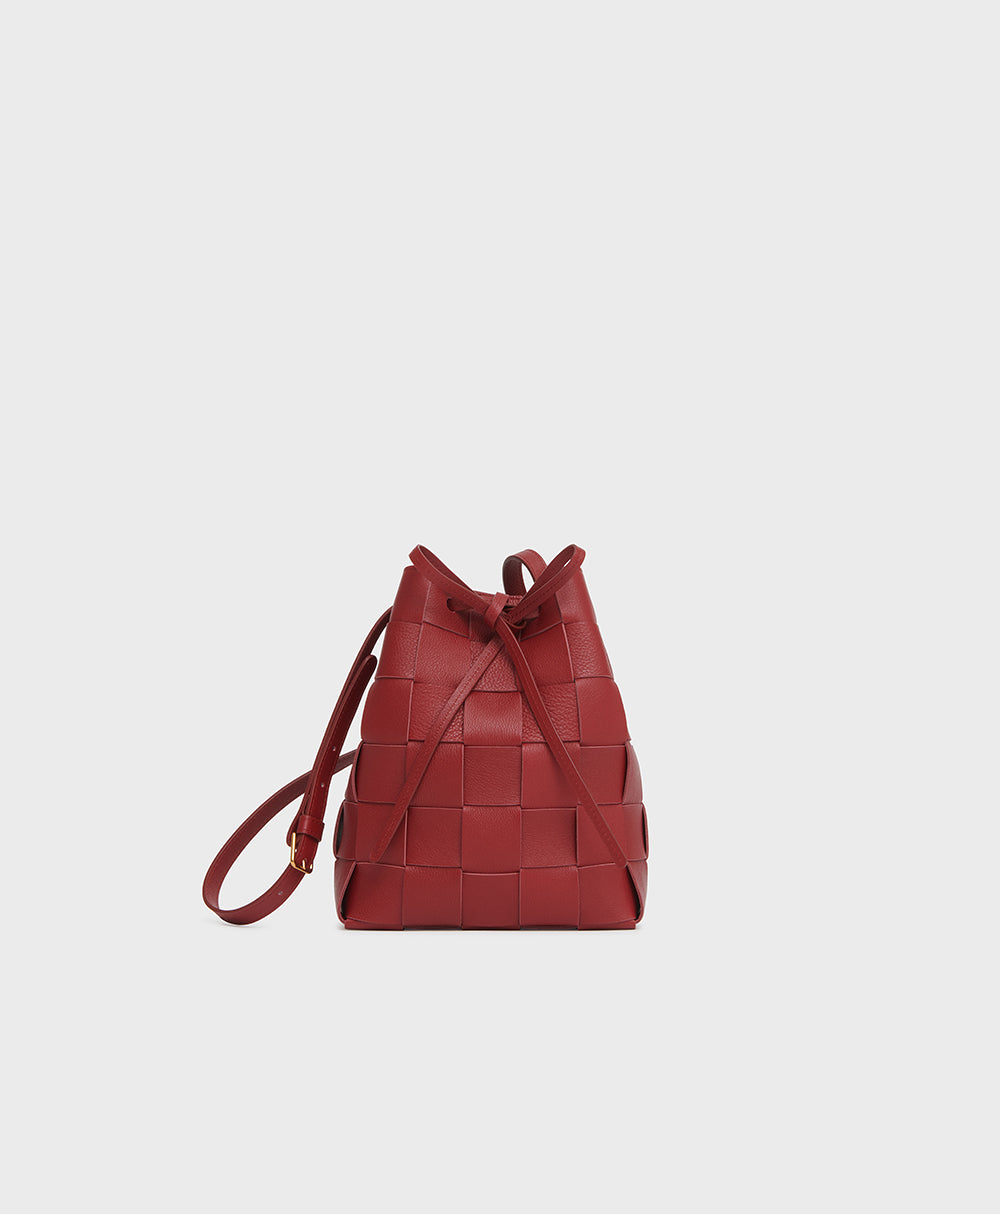 Suedette Singular Style Leather Handbag Organizer for Hermes